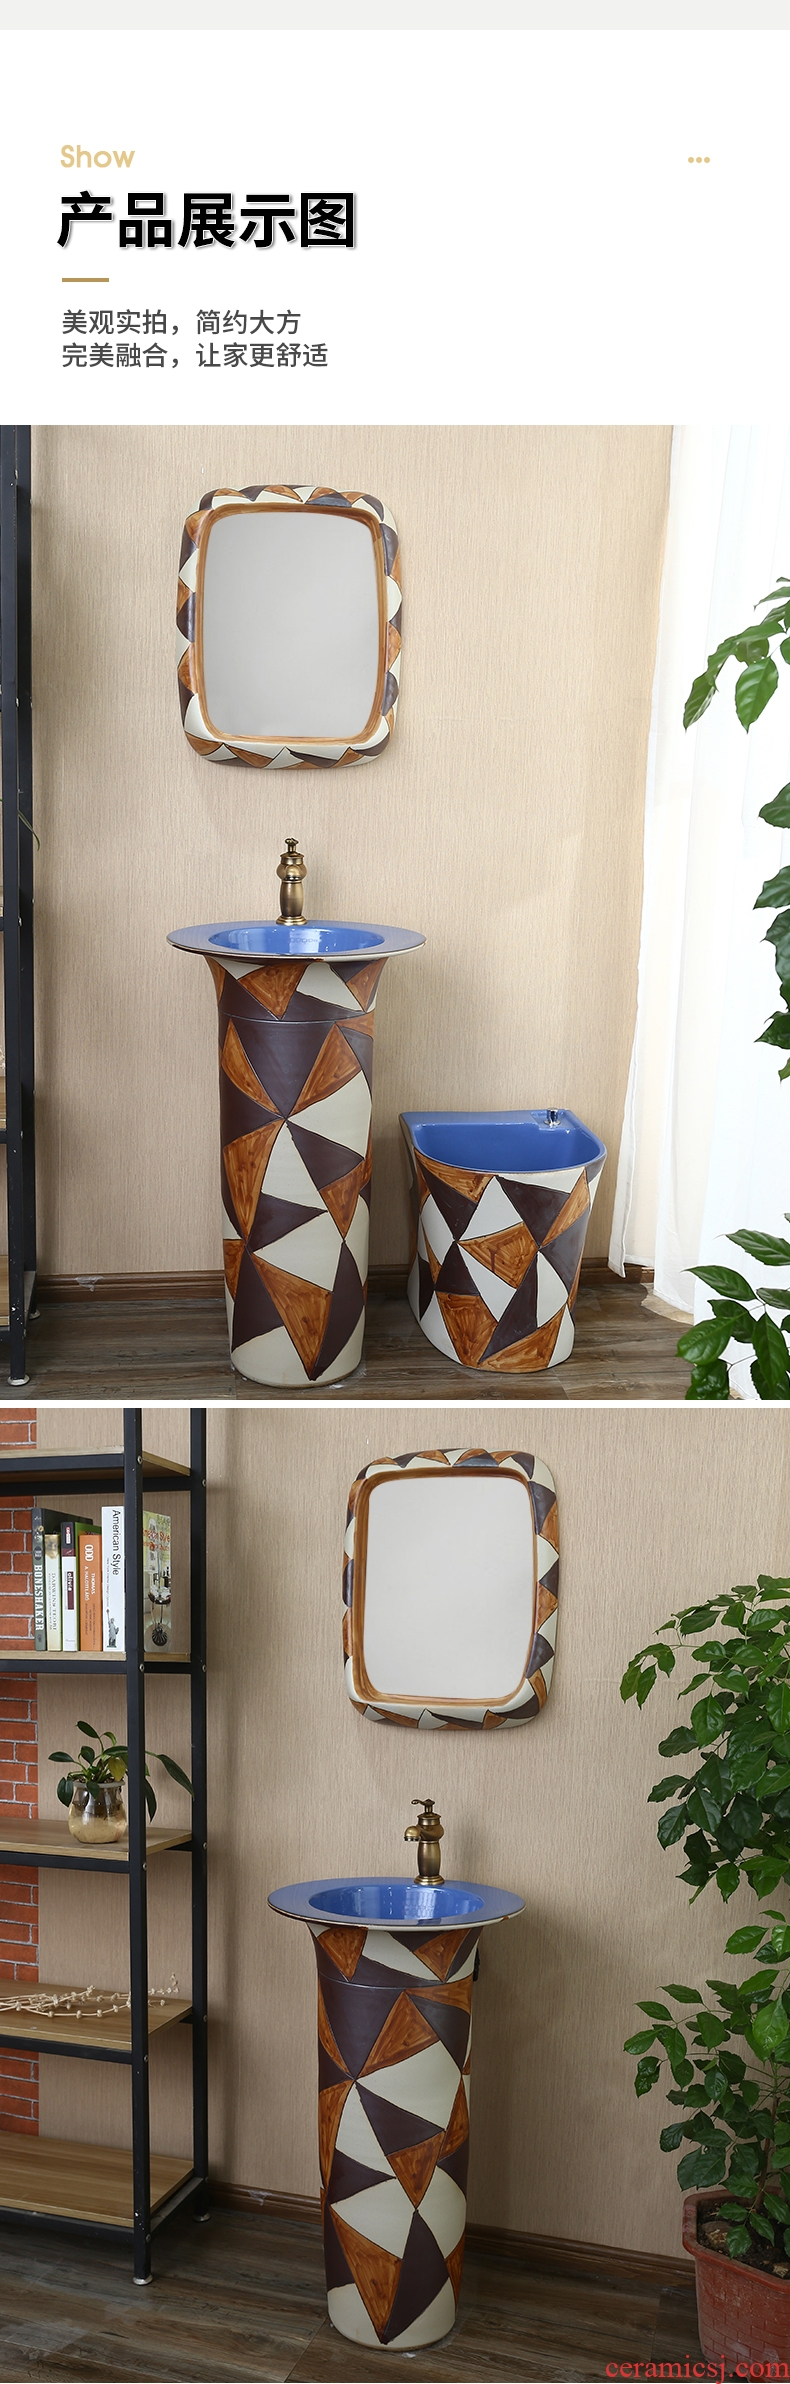 Up with ceramic tile of grain pillar basin ceramic home floor type lavatory pillar lavabo restoring ancient ways is a whole basin